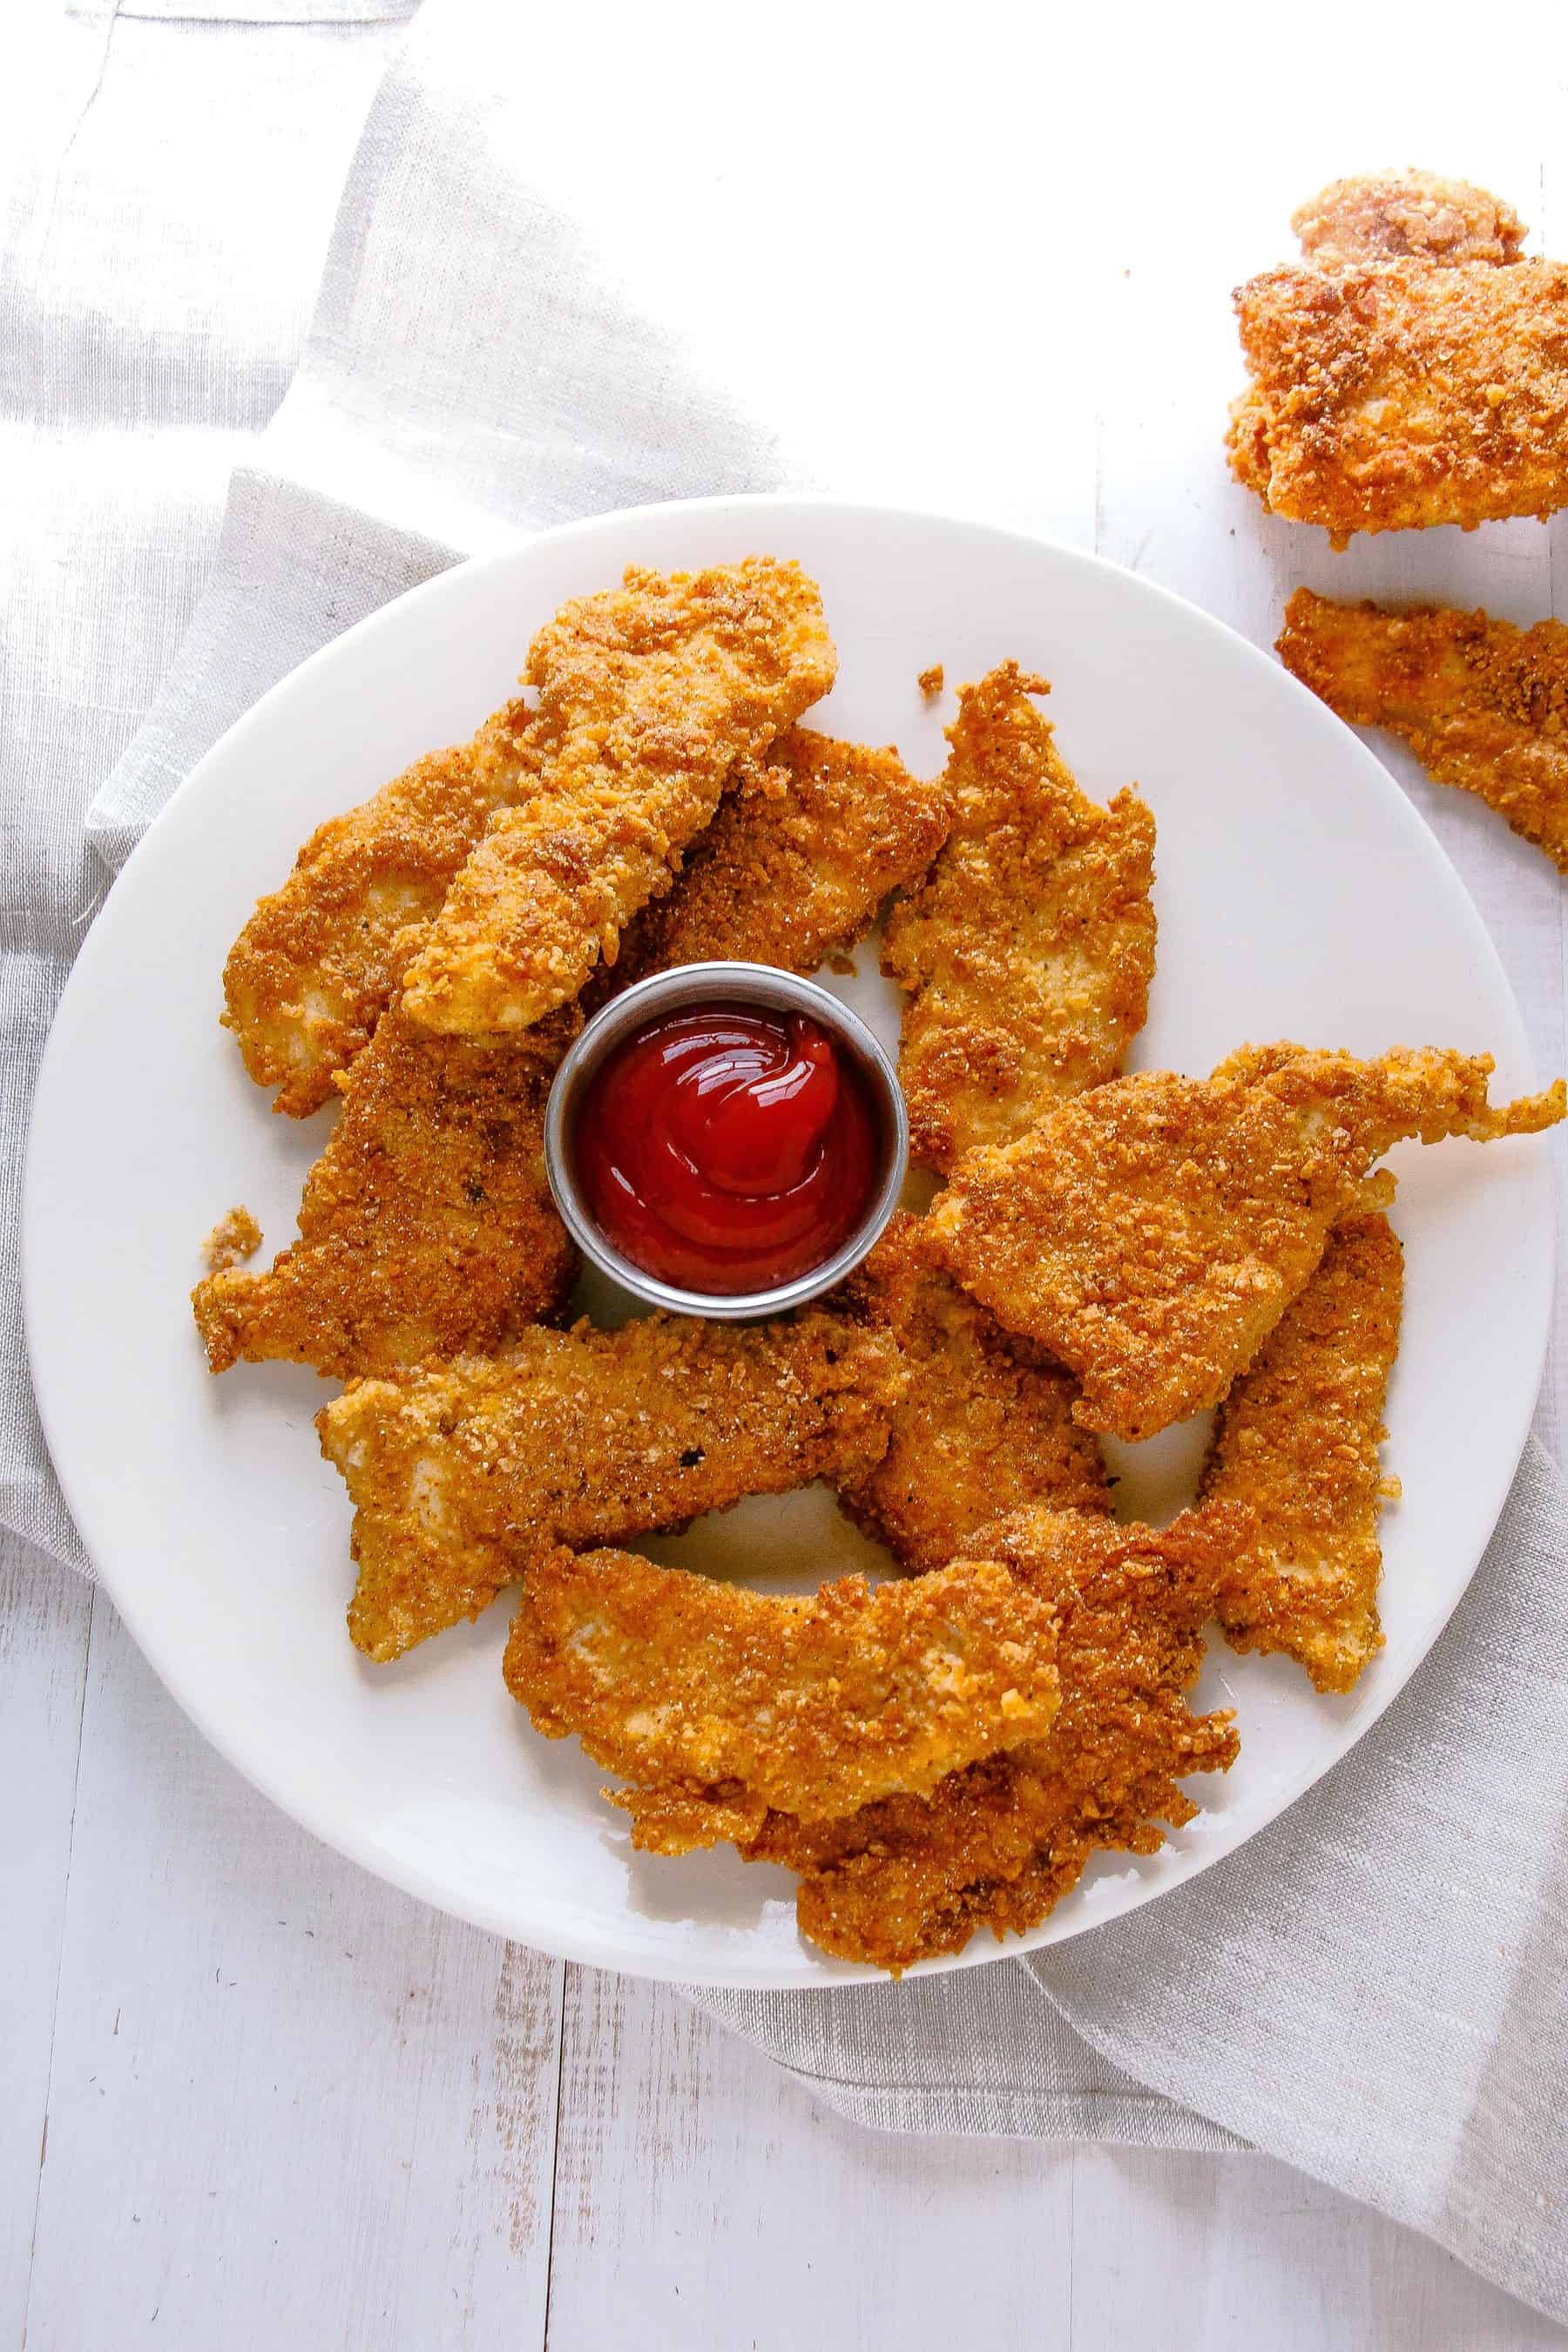 Homemade fried chicken fingers